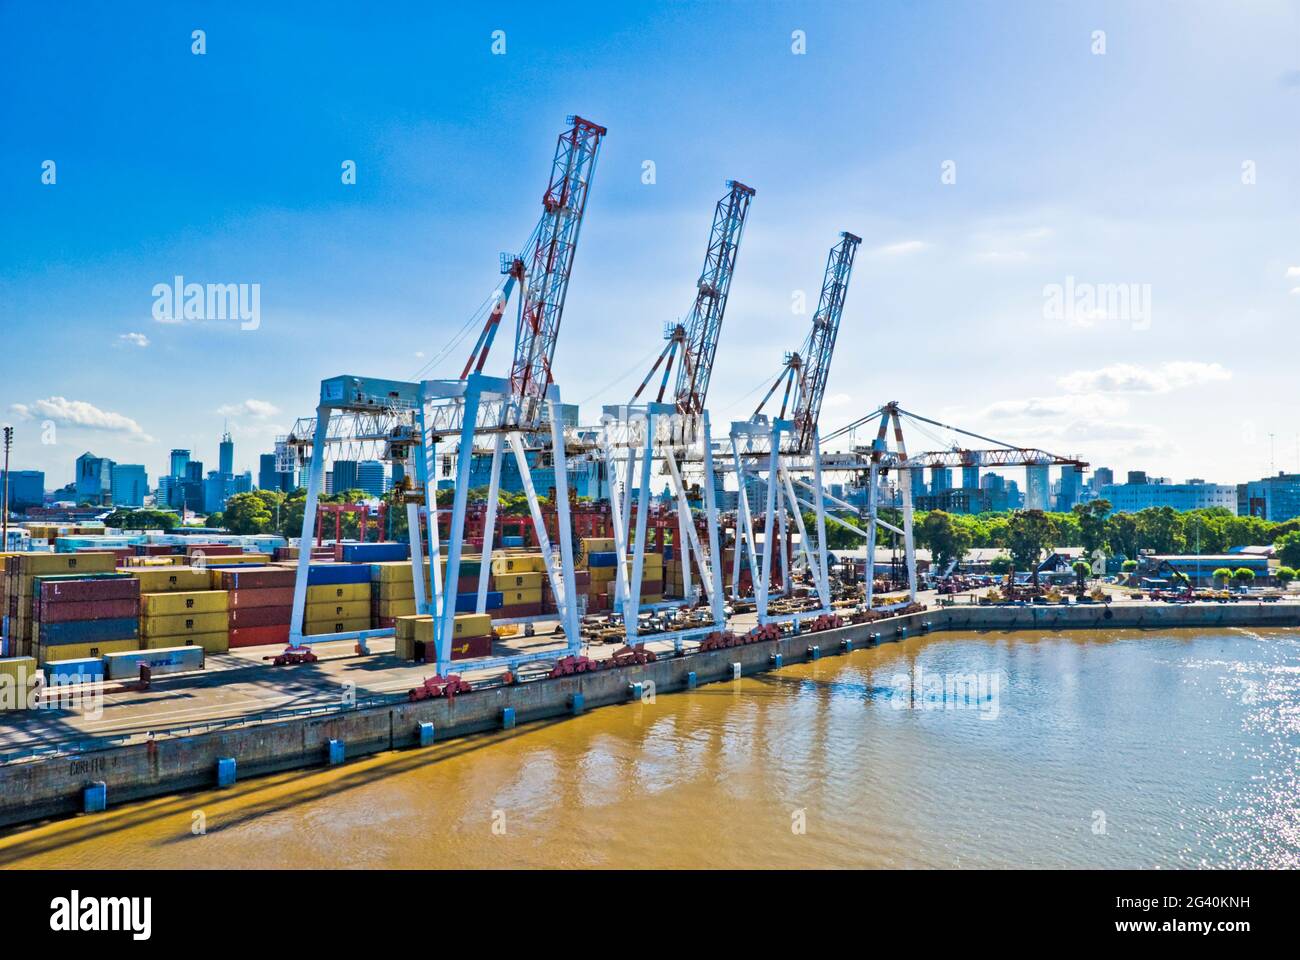 Row of cranes at New Port (Puerto Nuevo) - Buenos Aires, Argentina. #1208SA Stock Photo